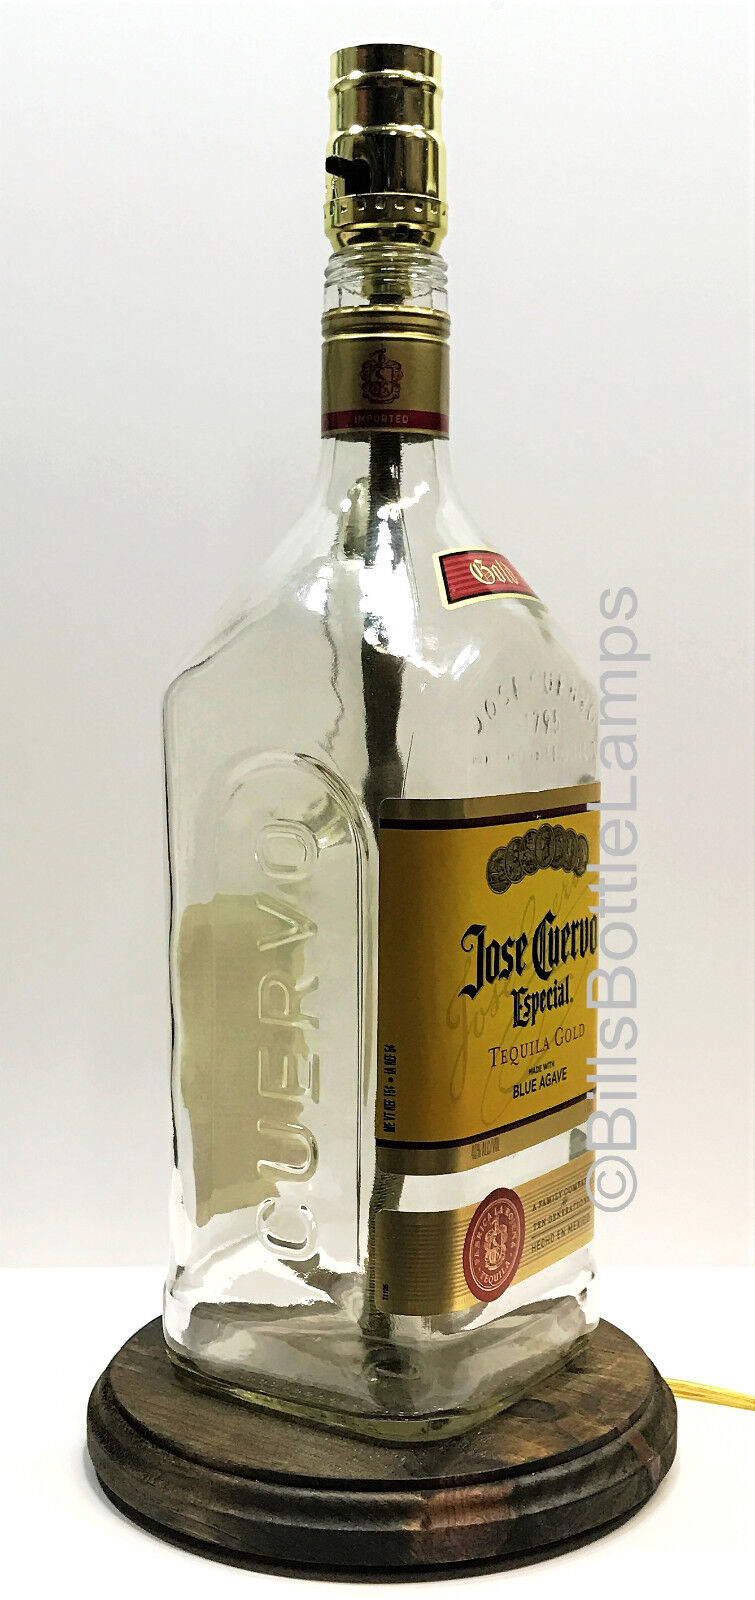 JOSE CUERVO ESPECIAL GOLD Large 1.75L Liquor Bottle TABLE LAMP Light & Wood Base BillsBottleLamps.com - фотография #2